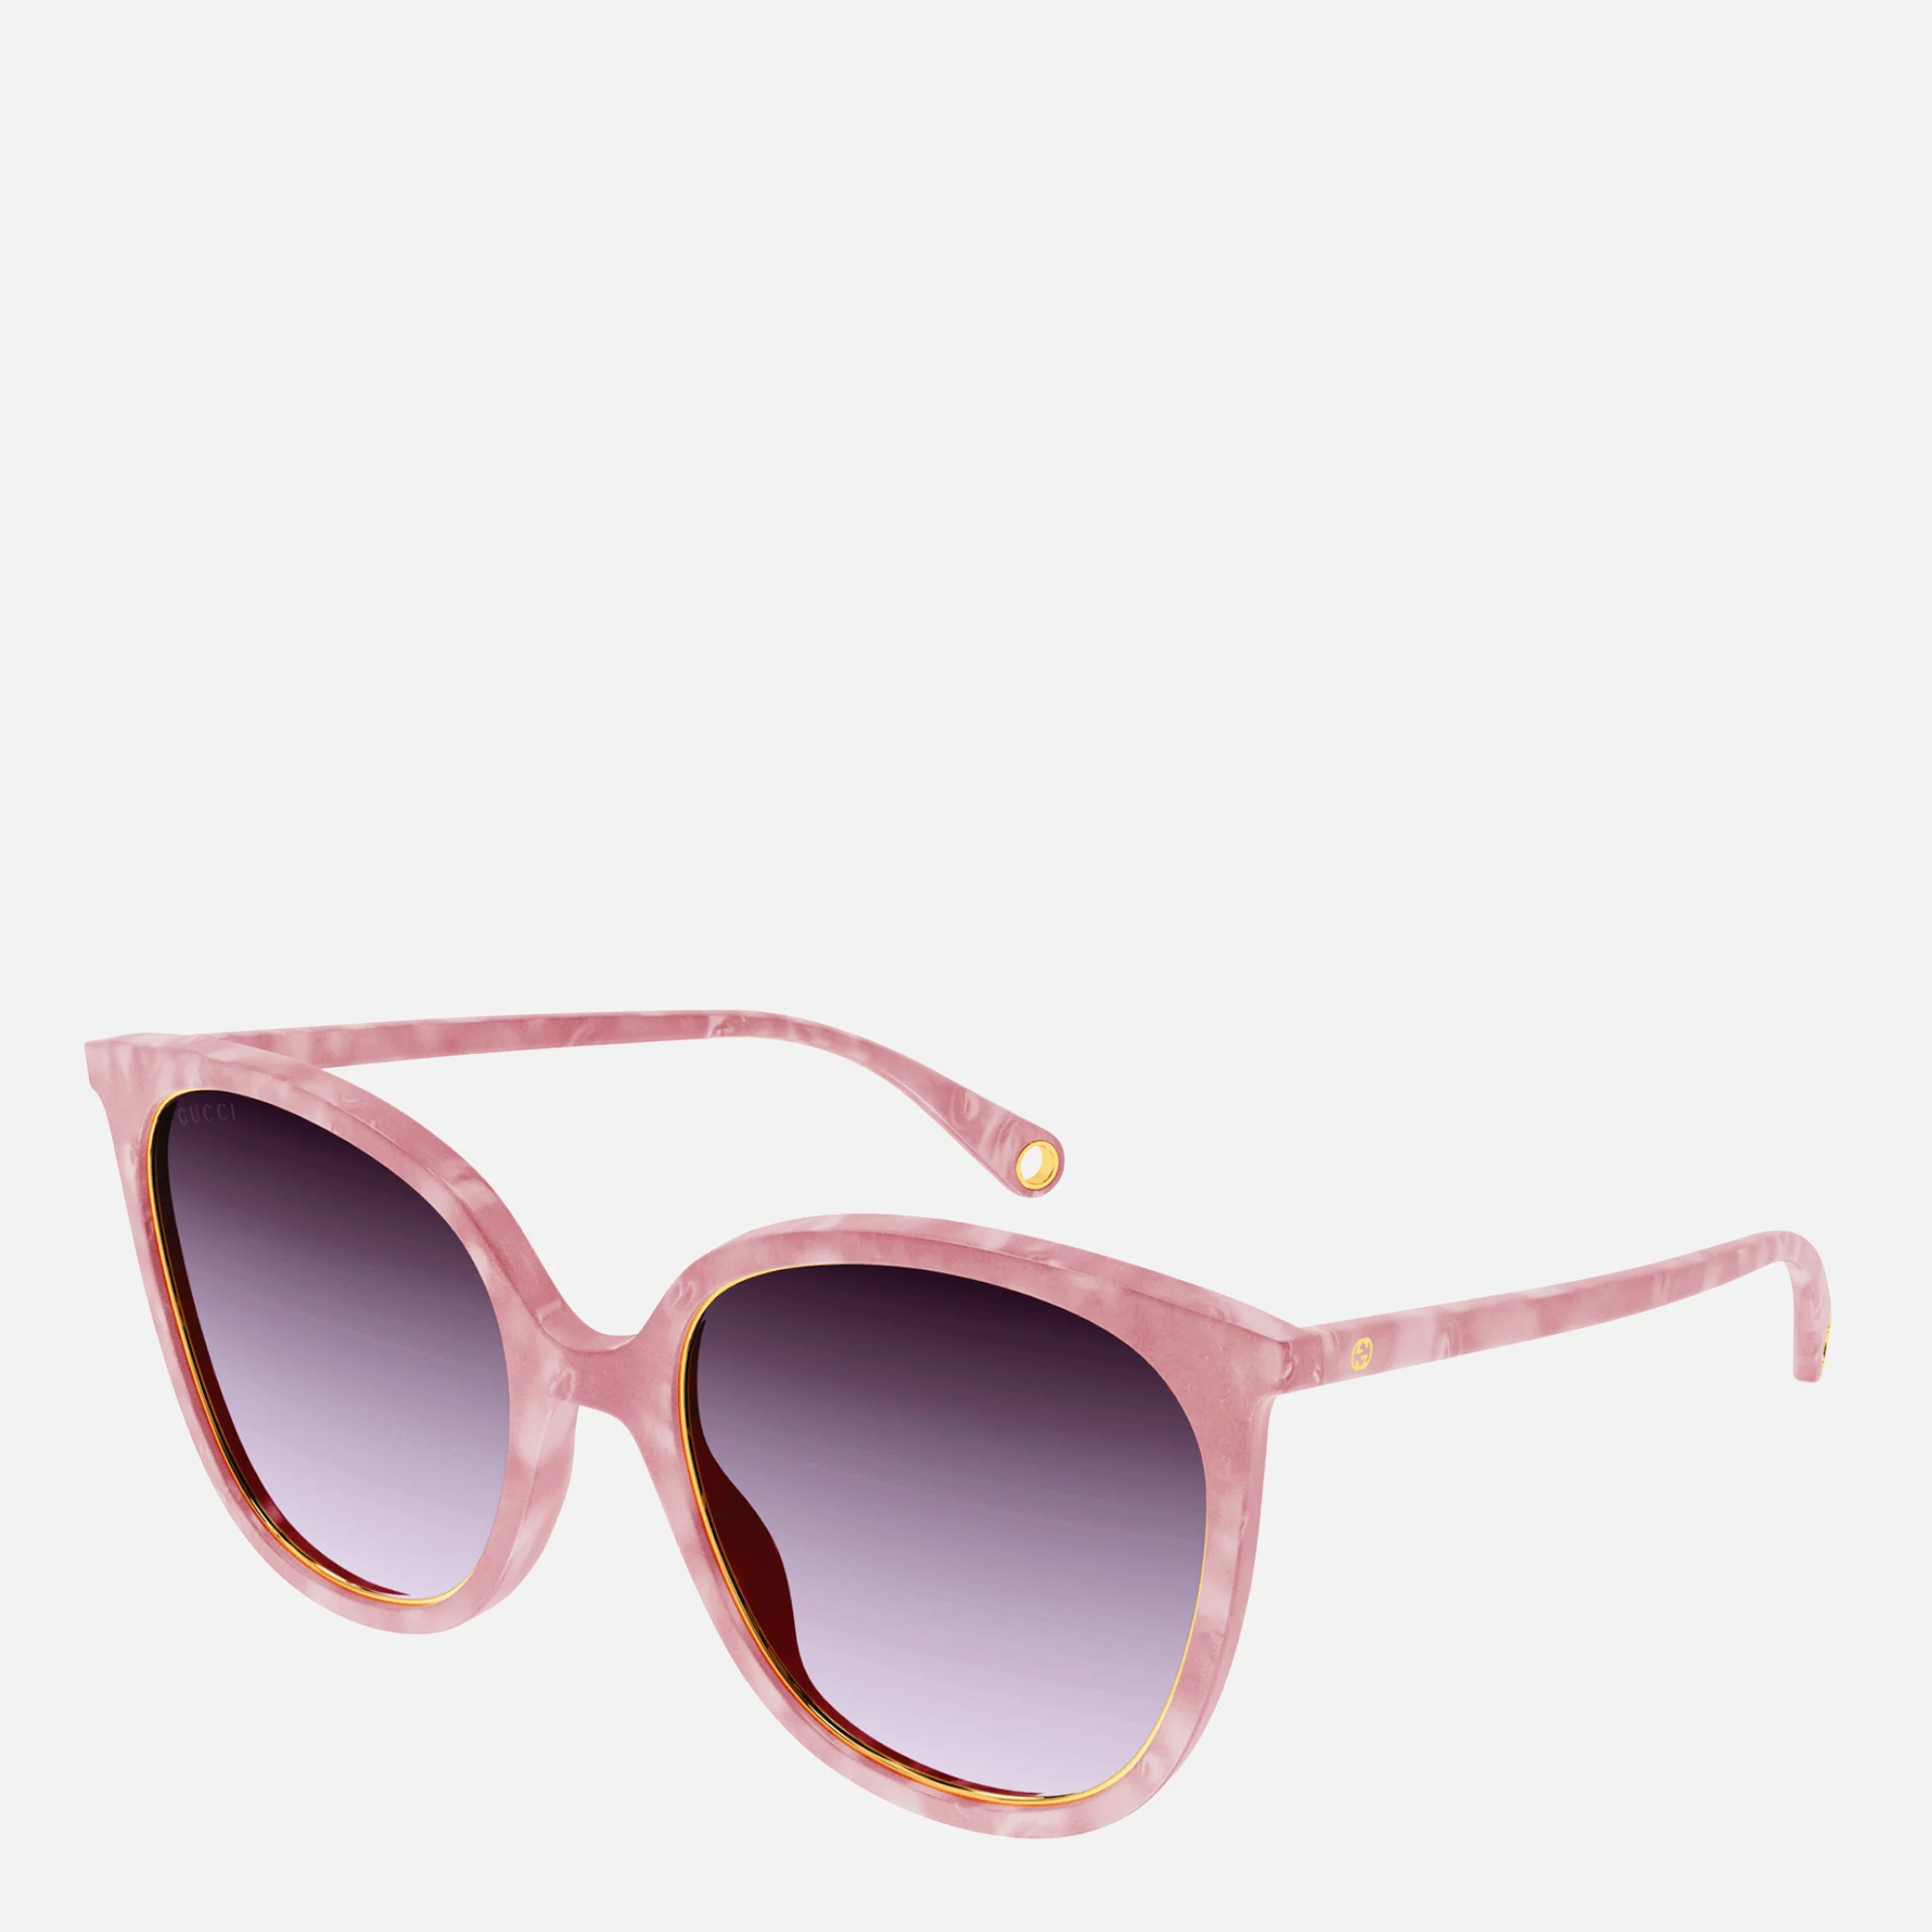 Gucci Women's Cat Eye Acetate Frames Sunglasses - Pink/Pink/Violet Image 1